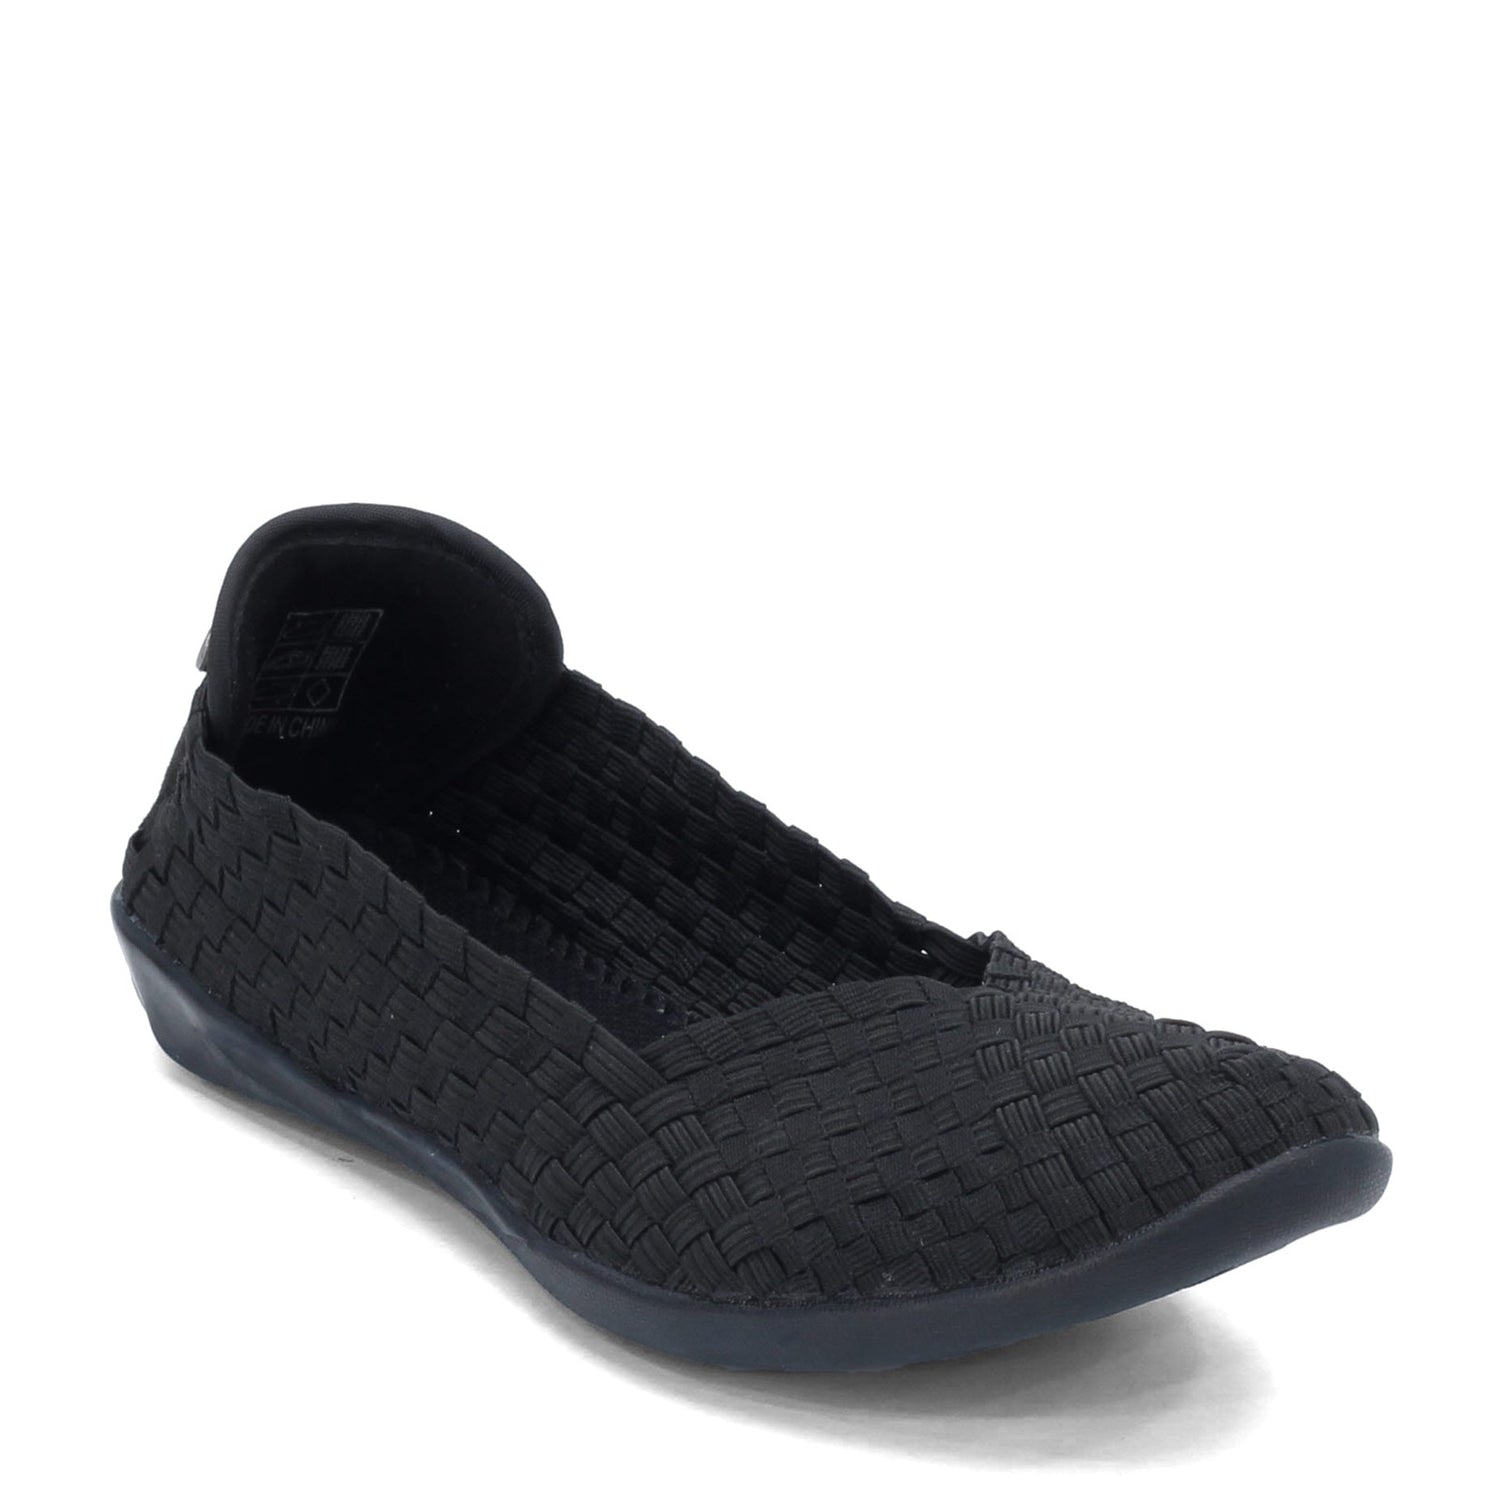 Peltz Shoes  Women's Bernie Mev Catwalk Slip-On BLACK CATWALK BLACK